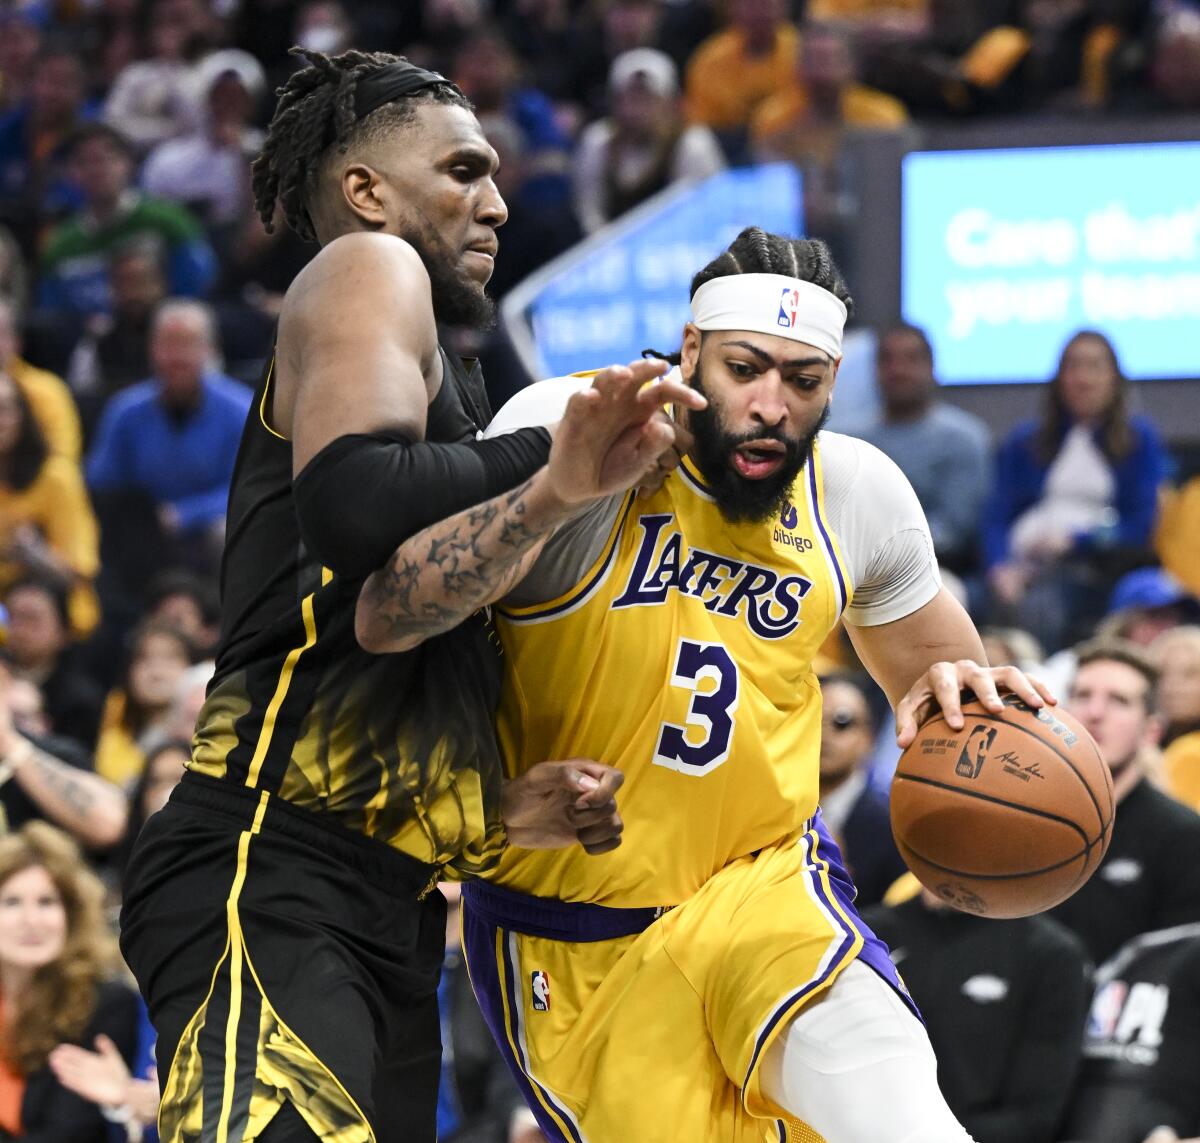 Photos: Lakers vs. Warriors (01/18/21) Photo Gallery